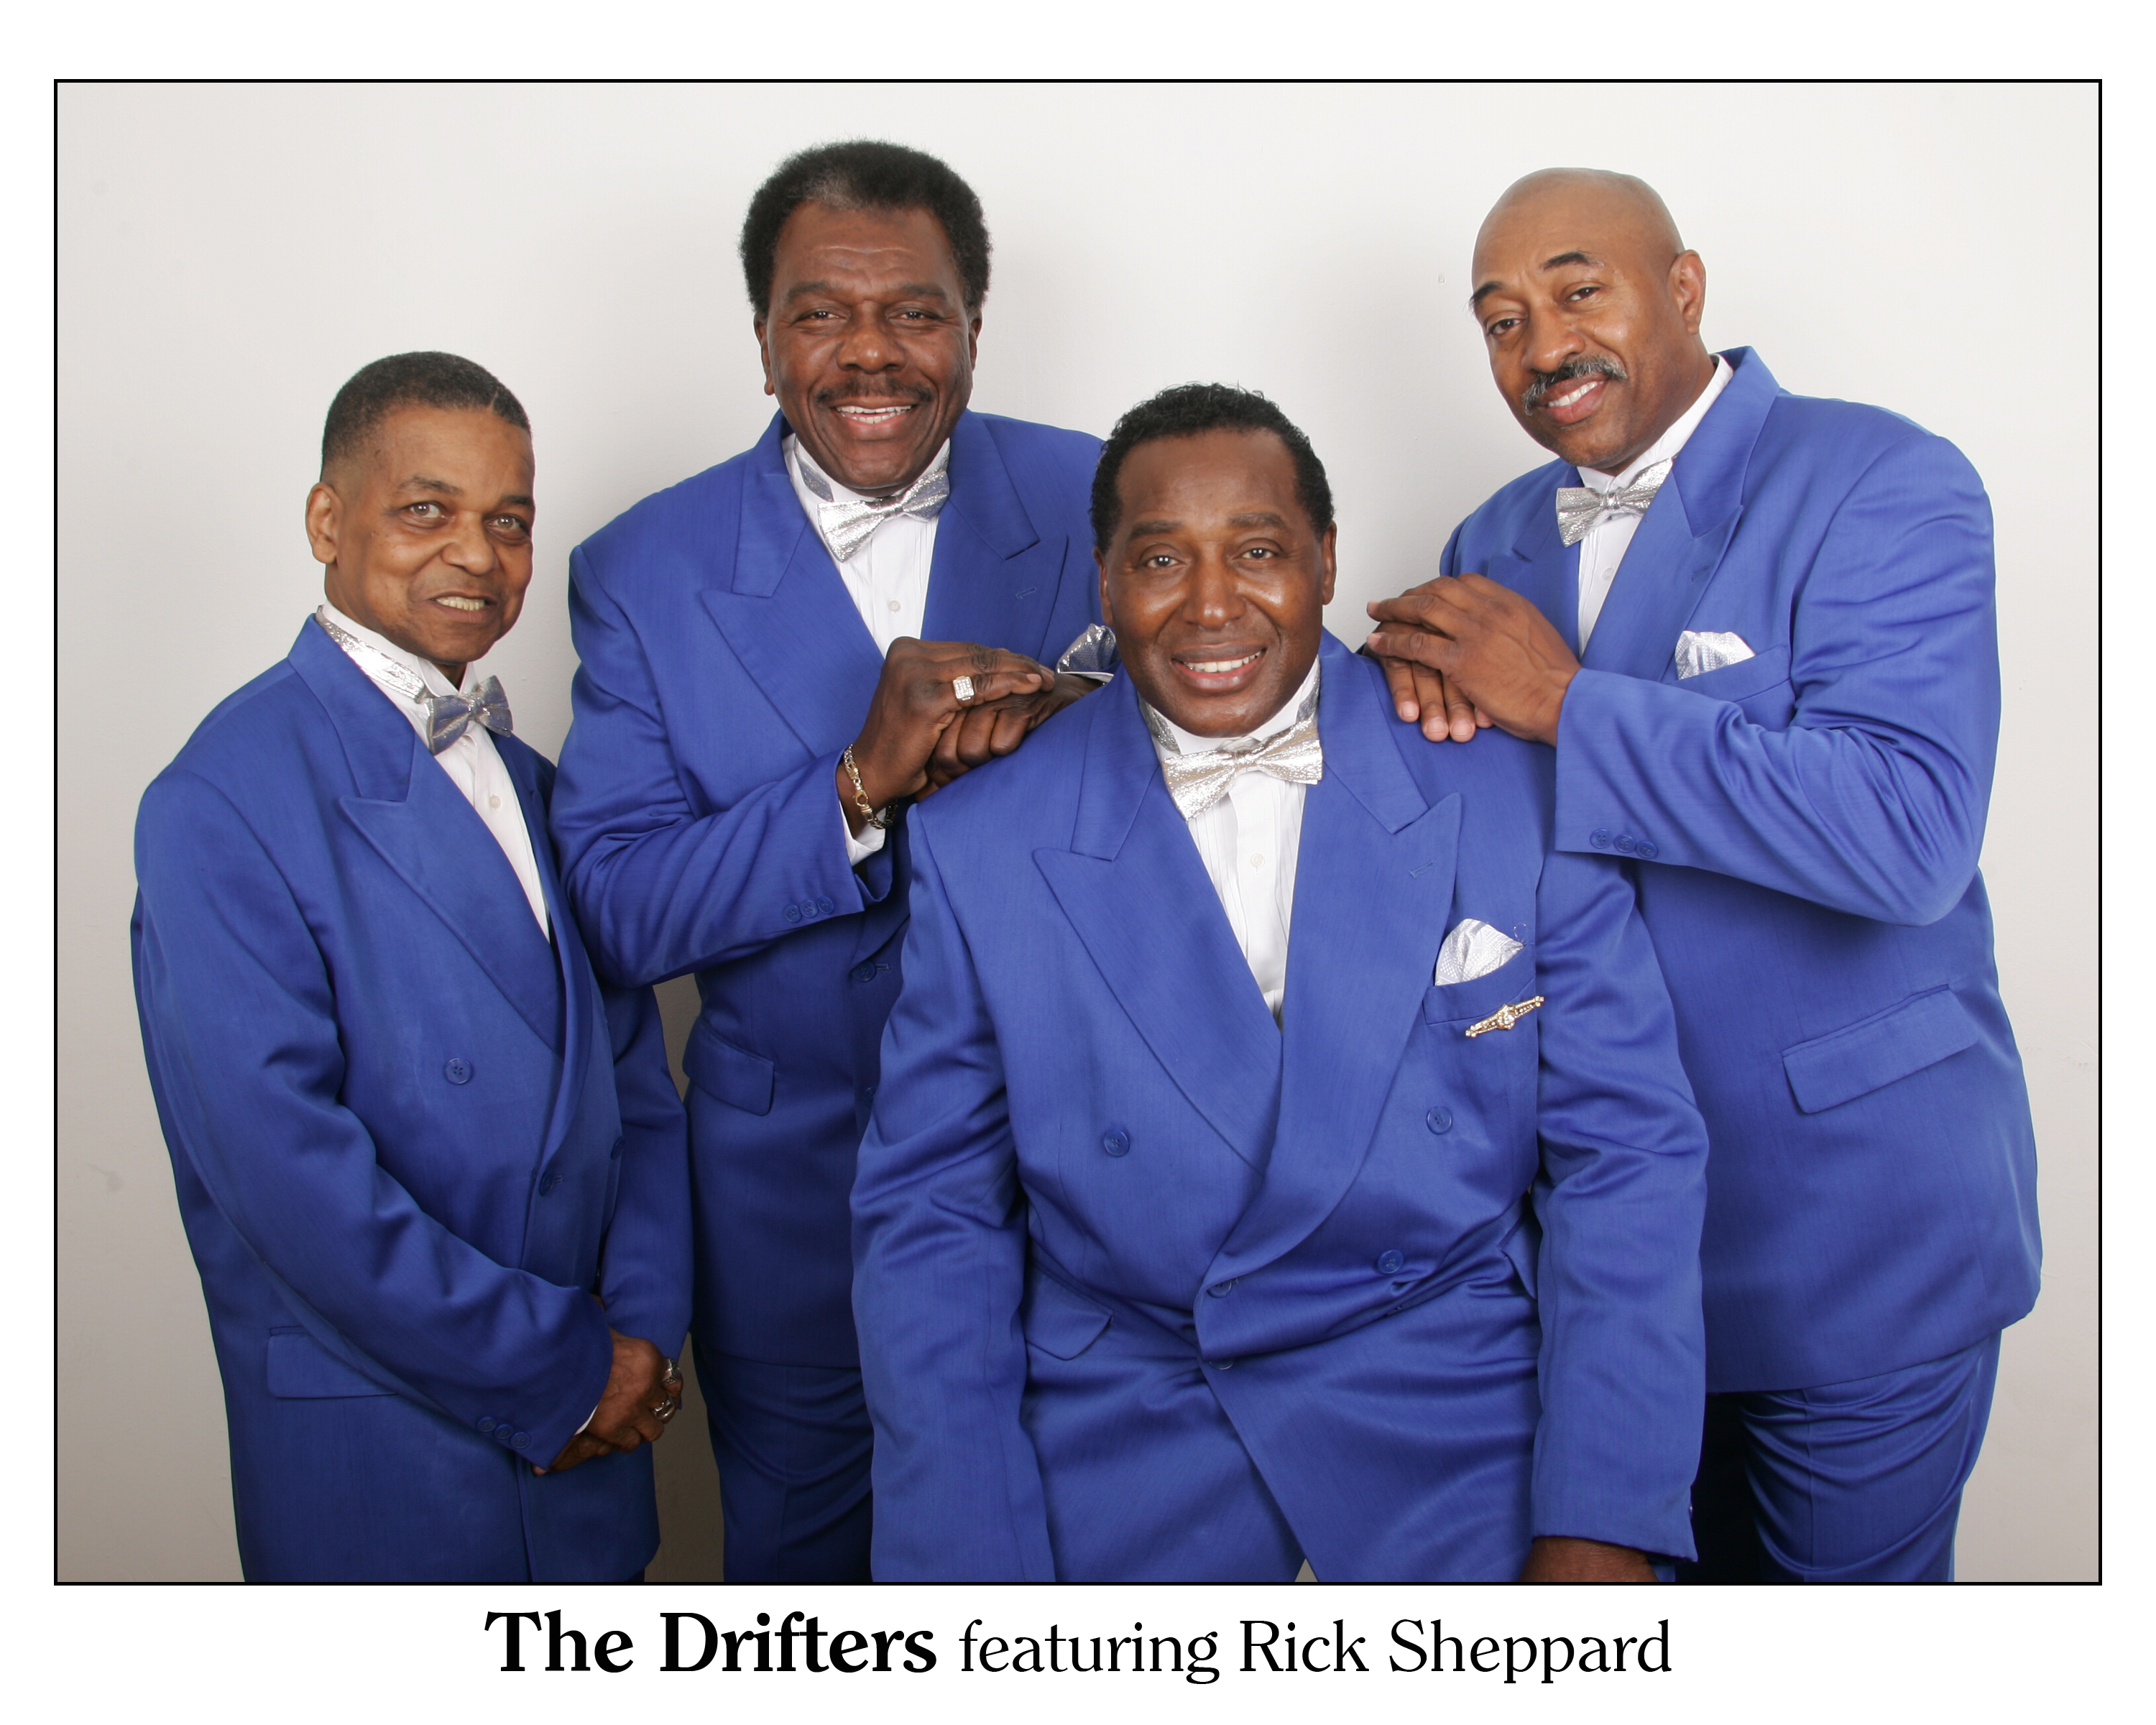 The Drifters featuring Rick Sheppard